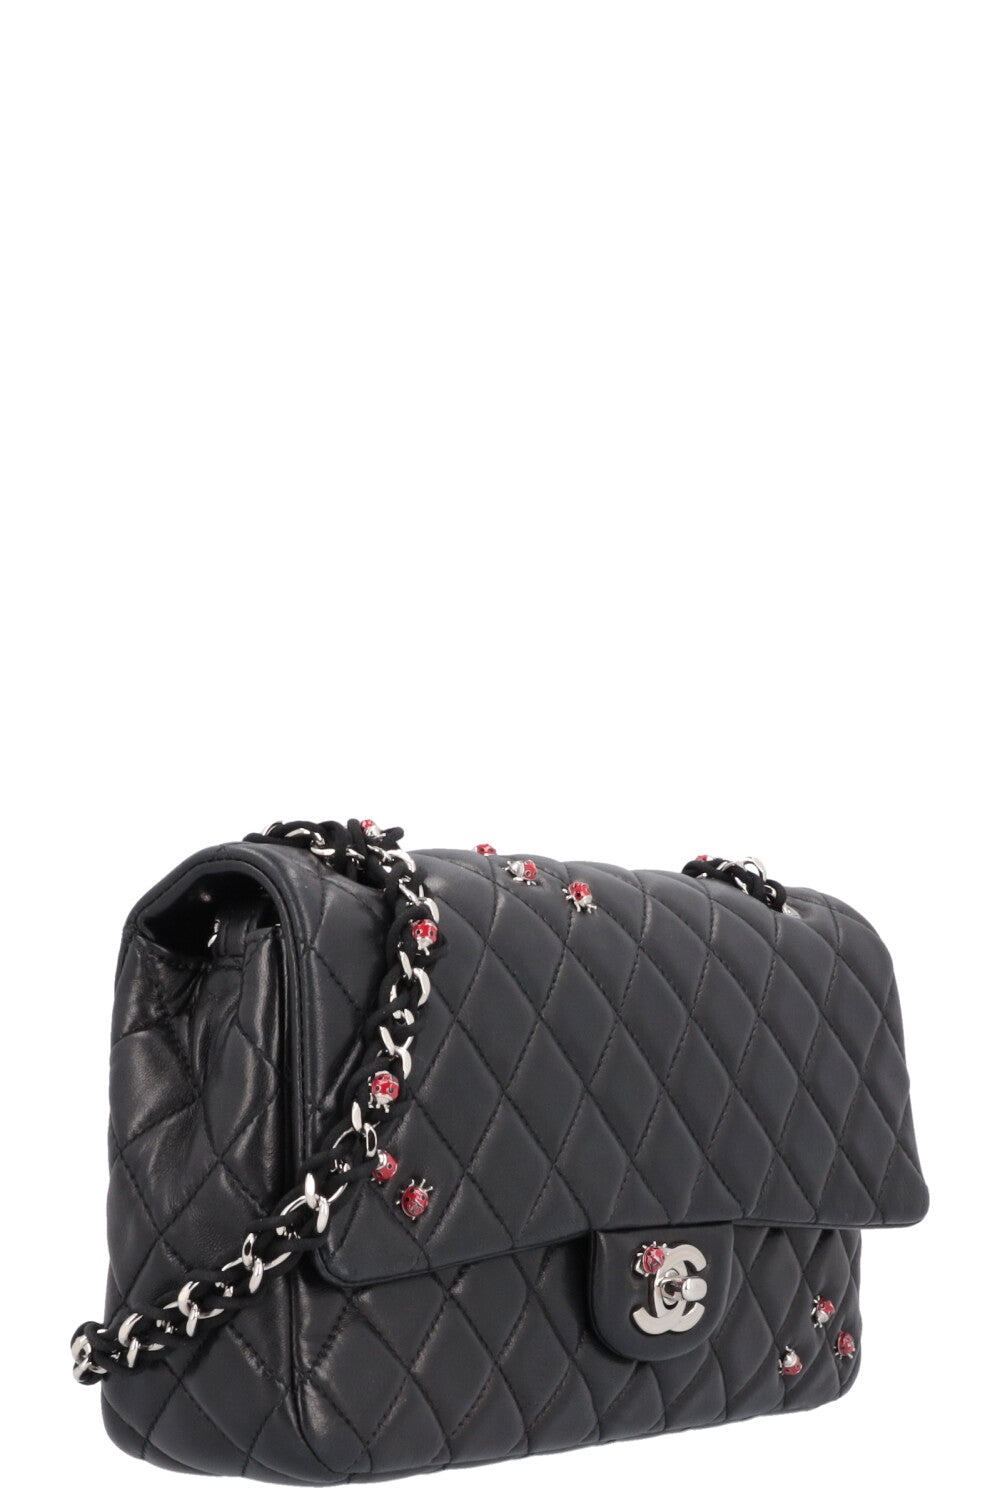 Chanel Classic Flap Bag: Ein Expertenratgeber